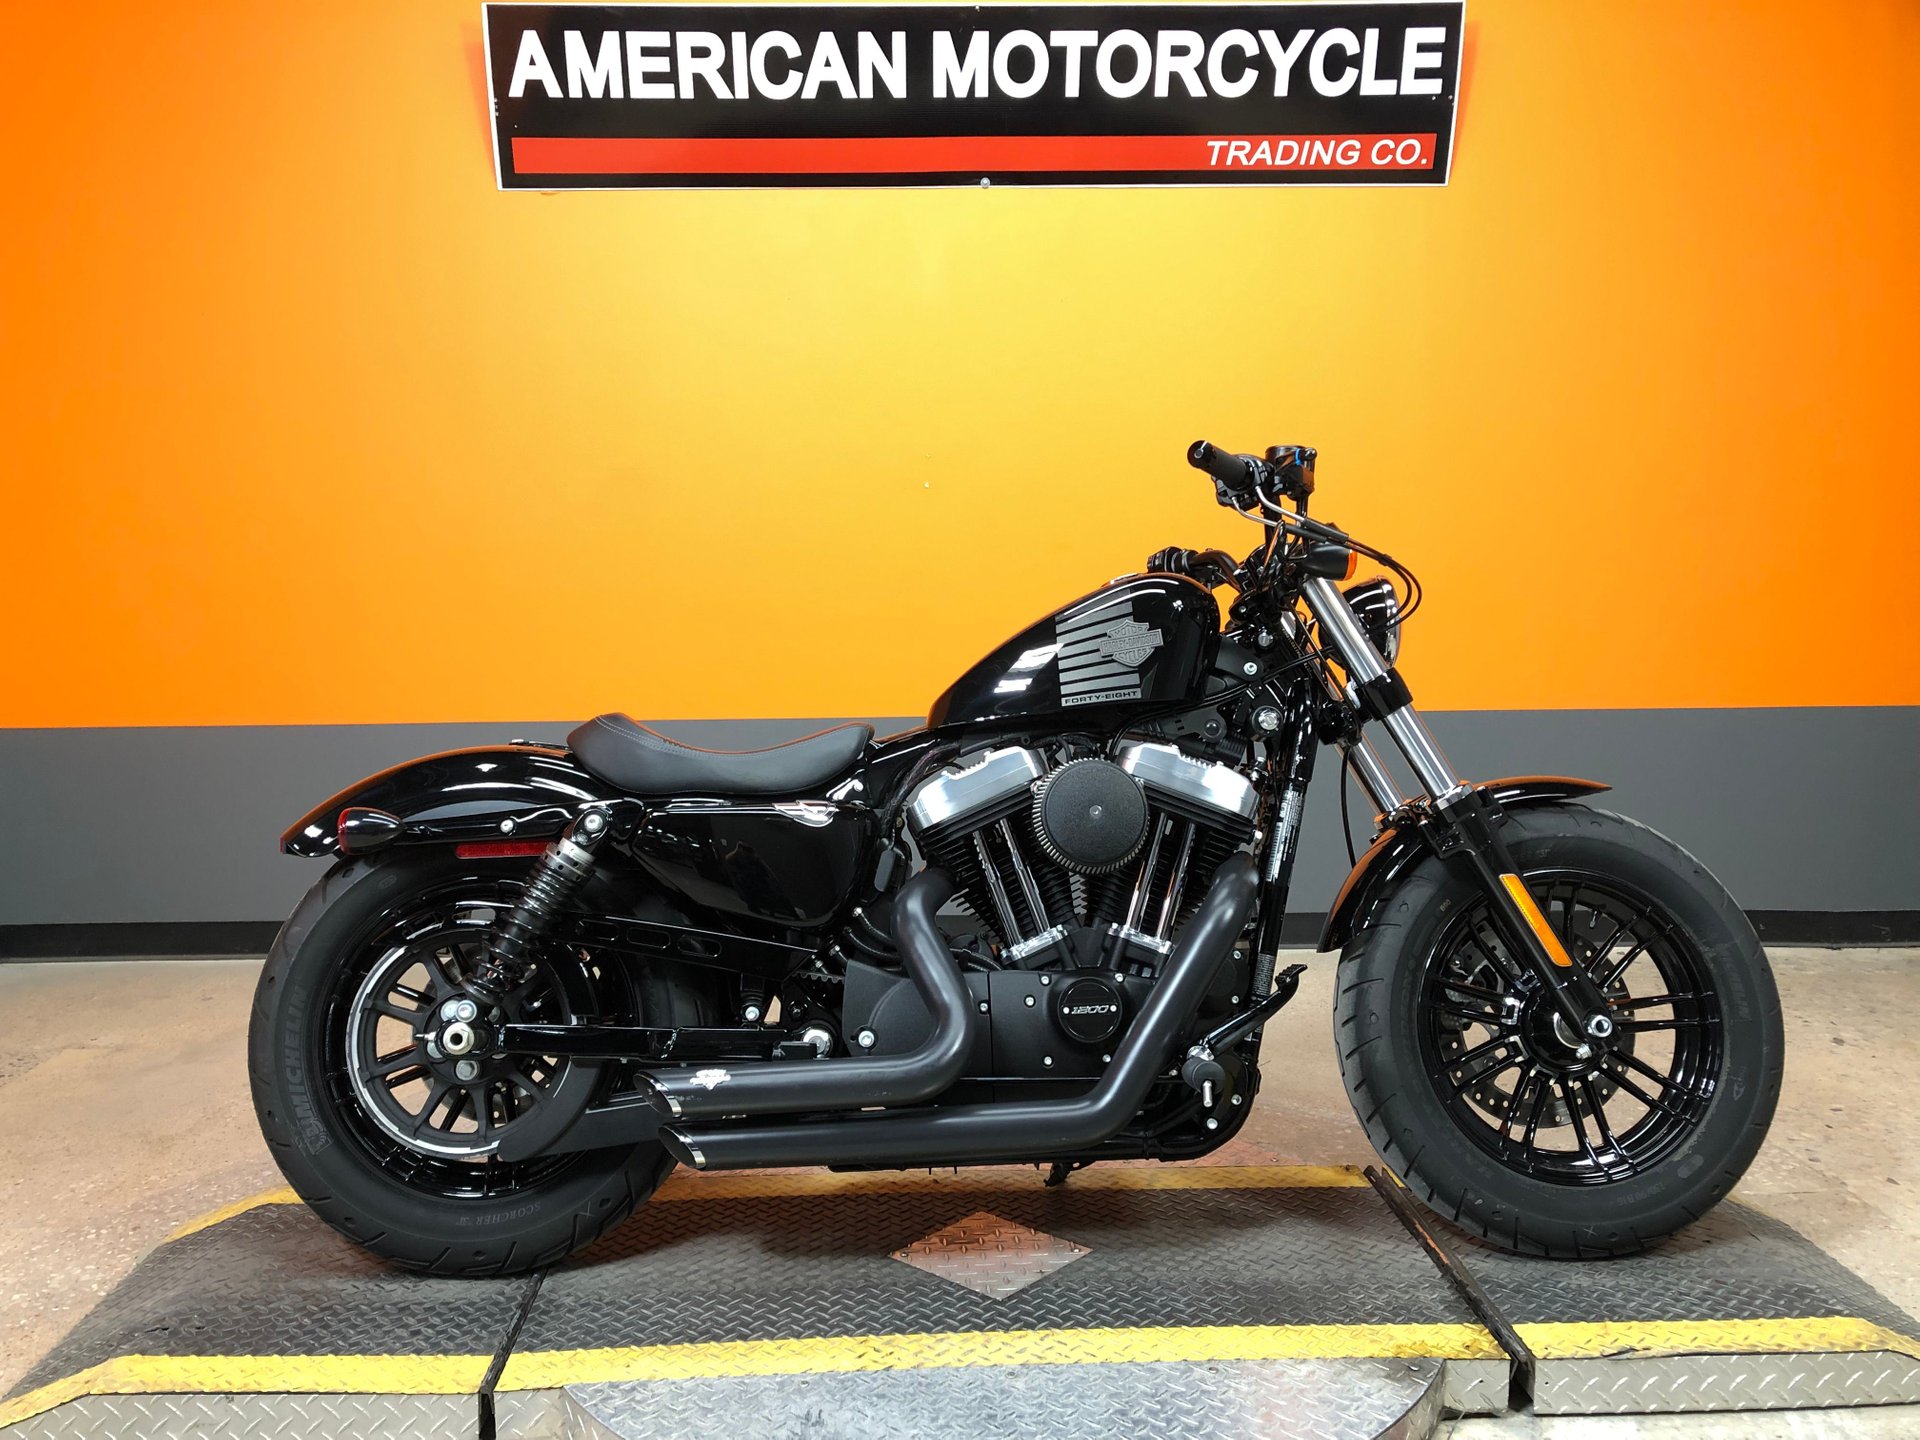 2017 Harley Davidson Sportster 1200 American Motorcycle Trading Company Used Harley Davidson Motorcycles